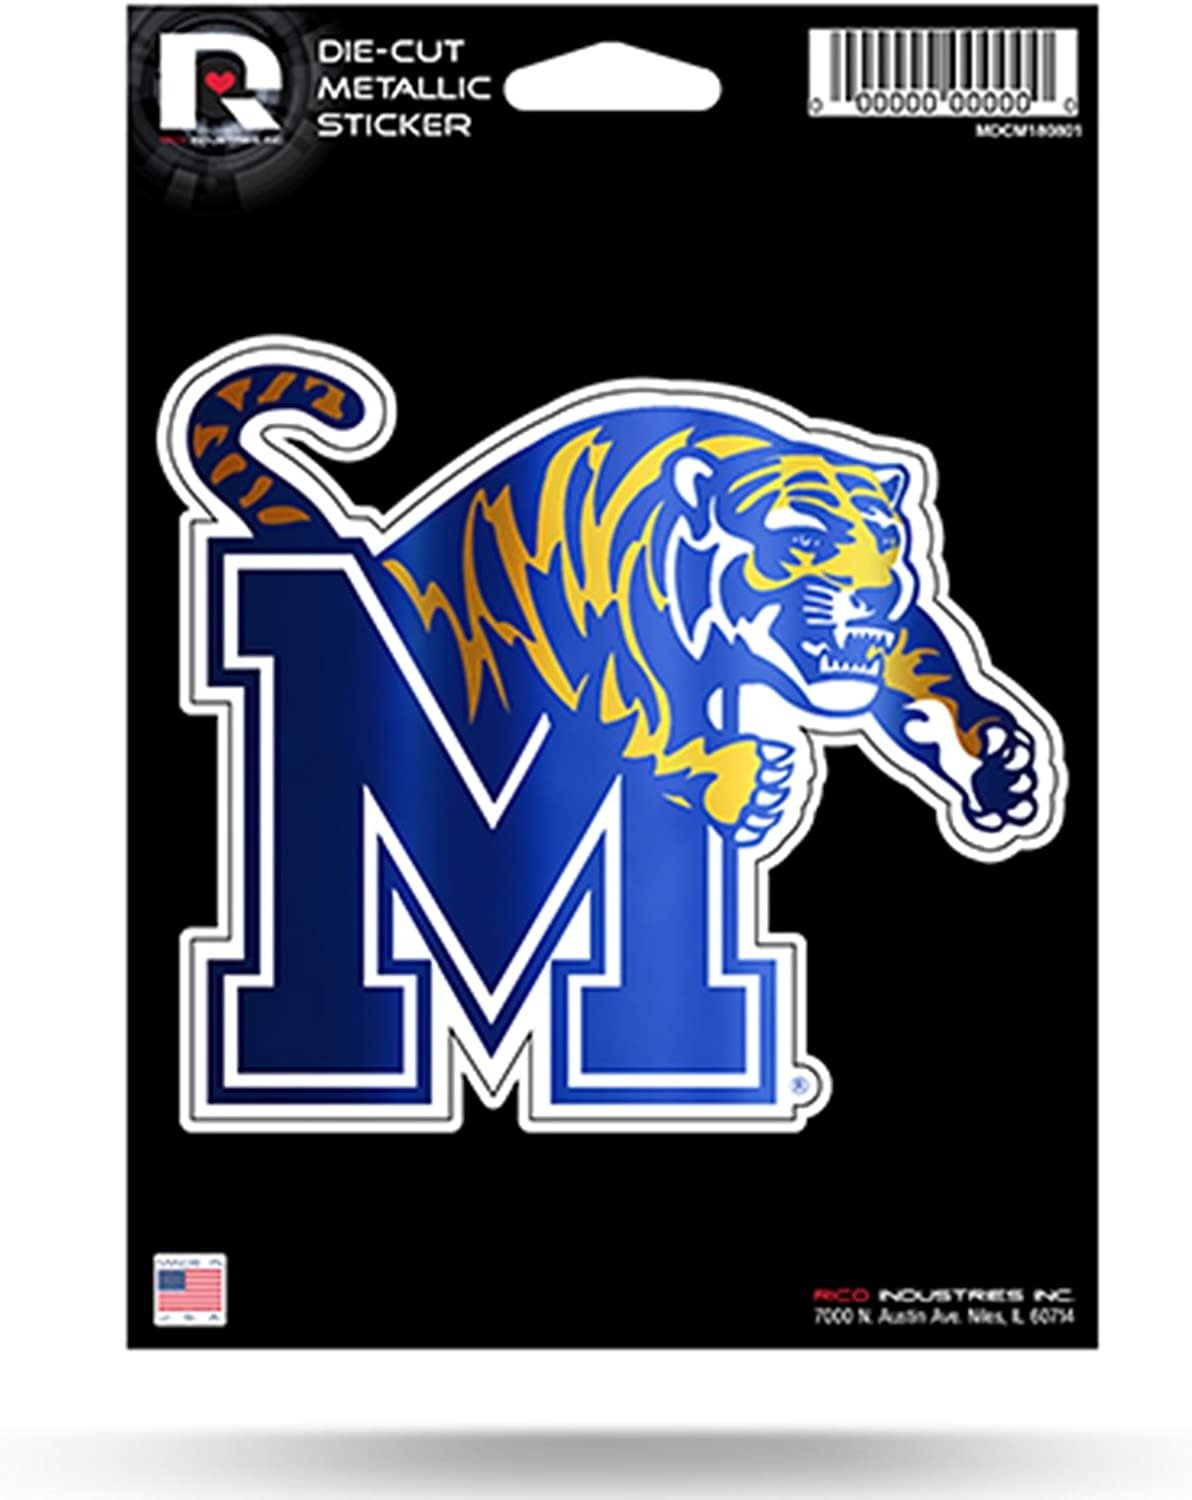 University of Memphis Tigers Sticker Decal 5 Inch Metallic Chrome Shimmer Flat Vinyl Die Cut Auto Home Emblem